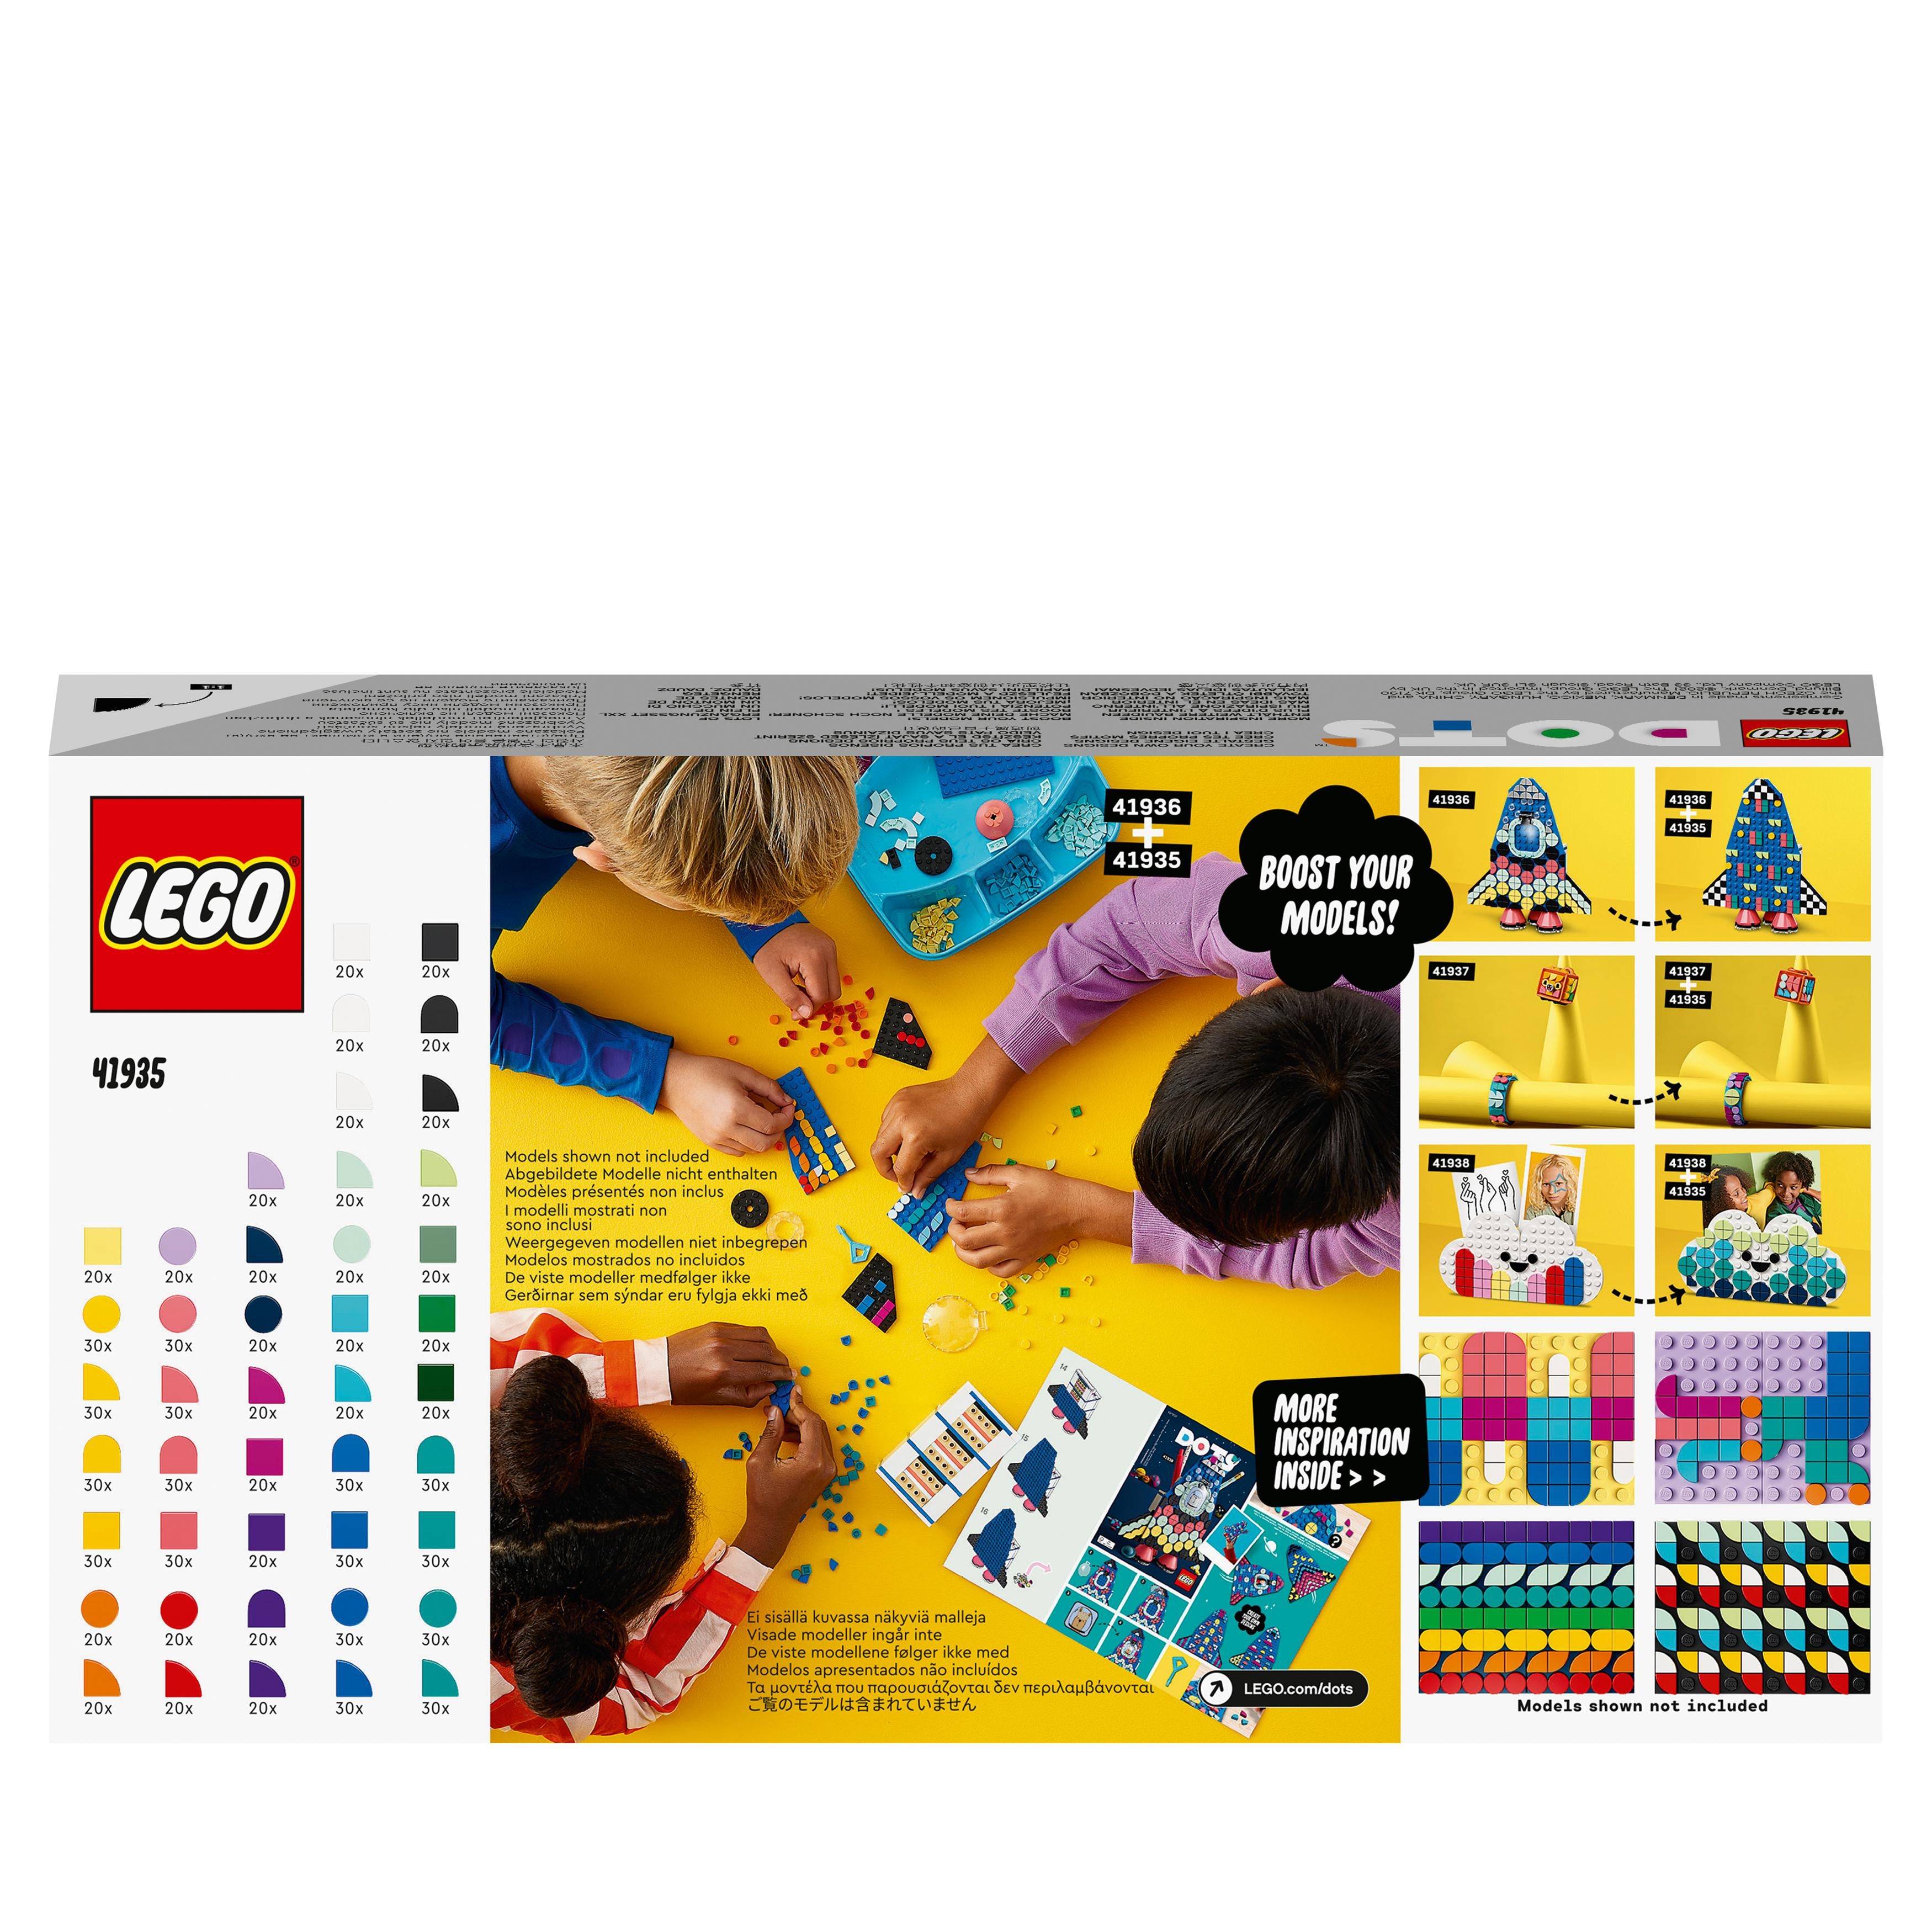 LEGO DOTS Lots of DOTS 41935